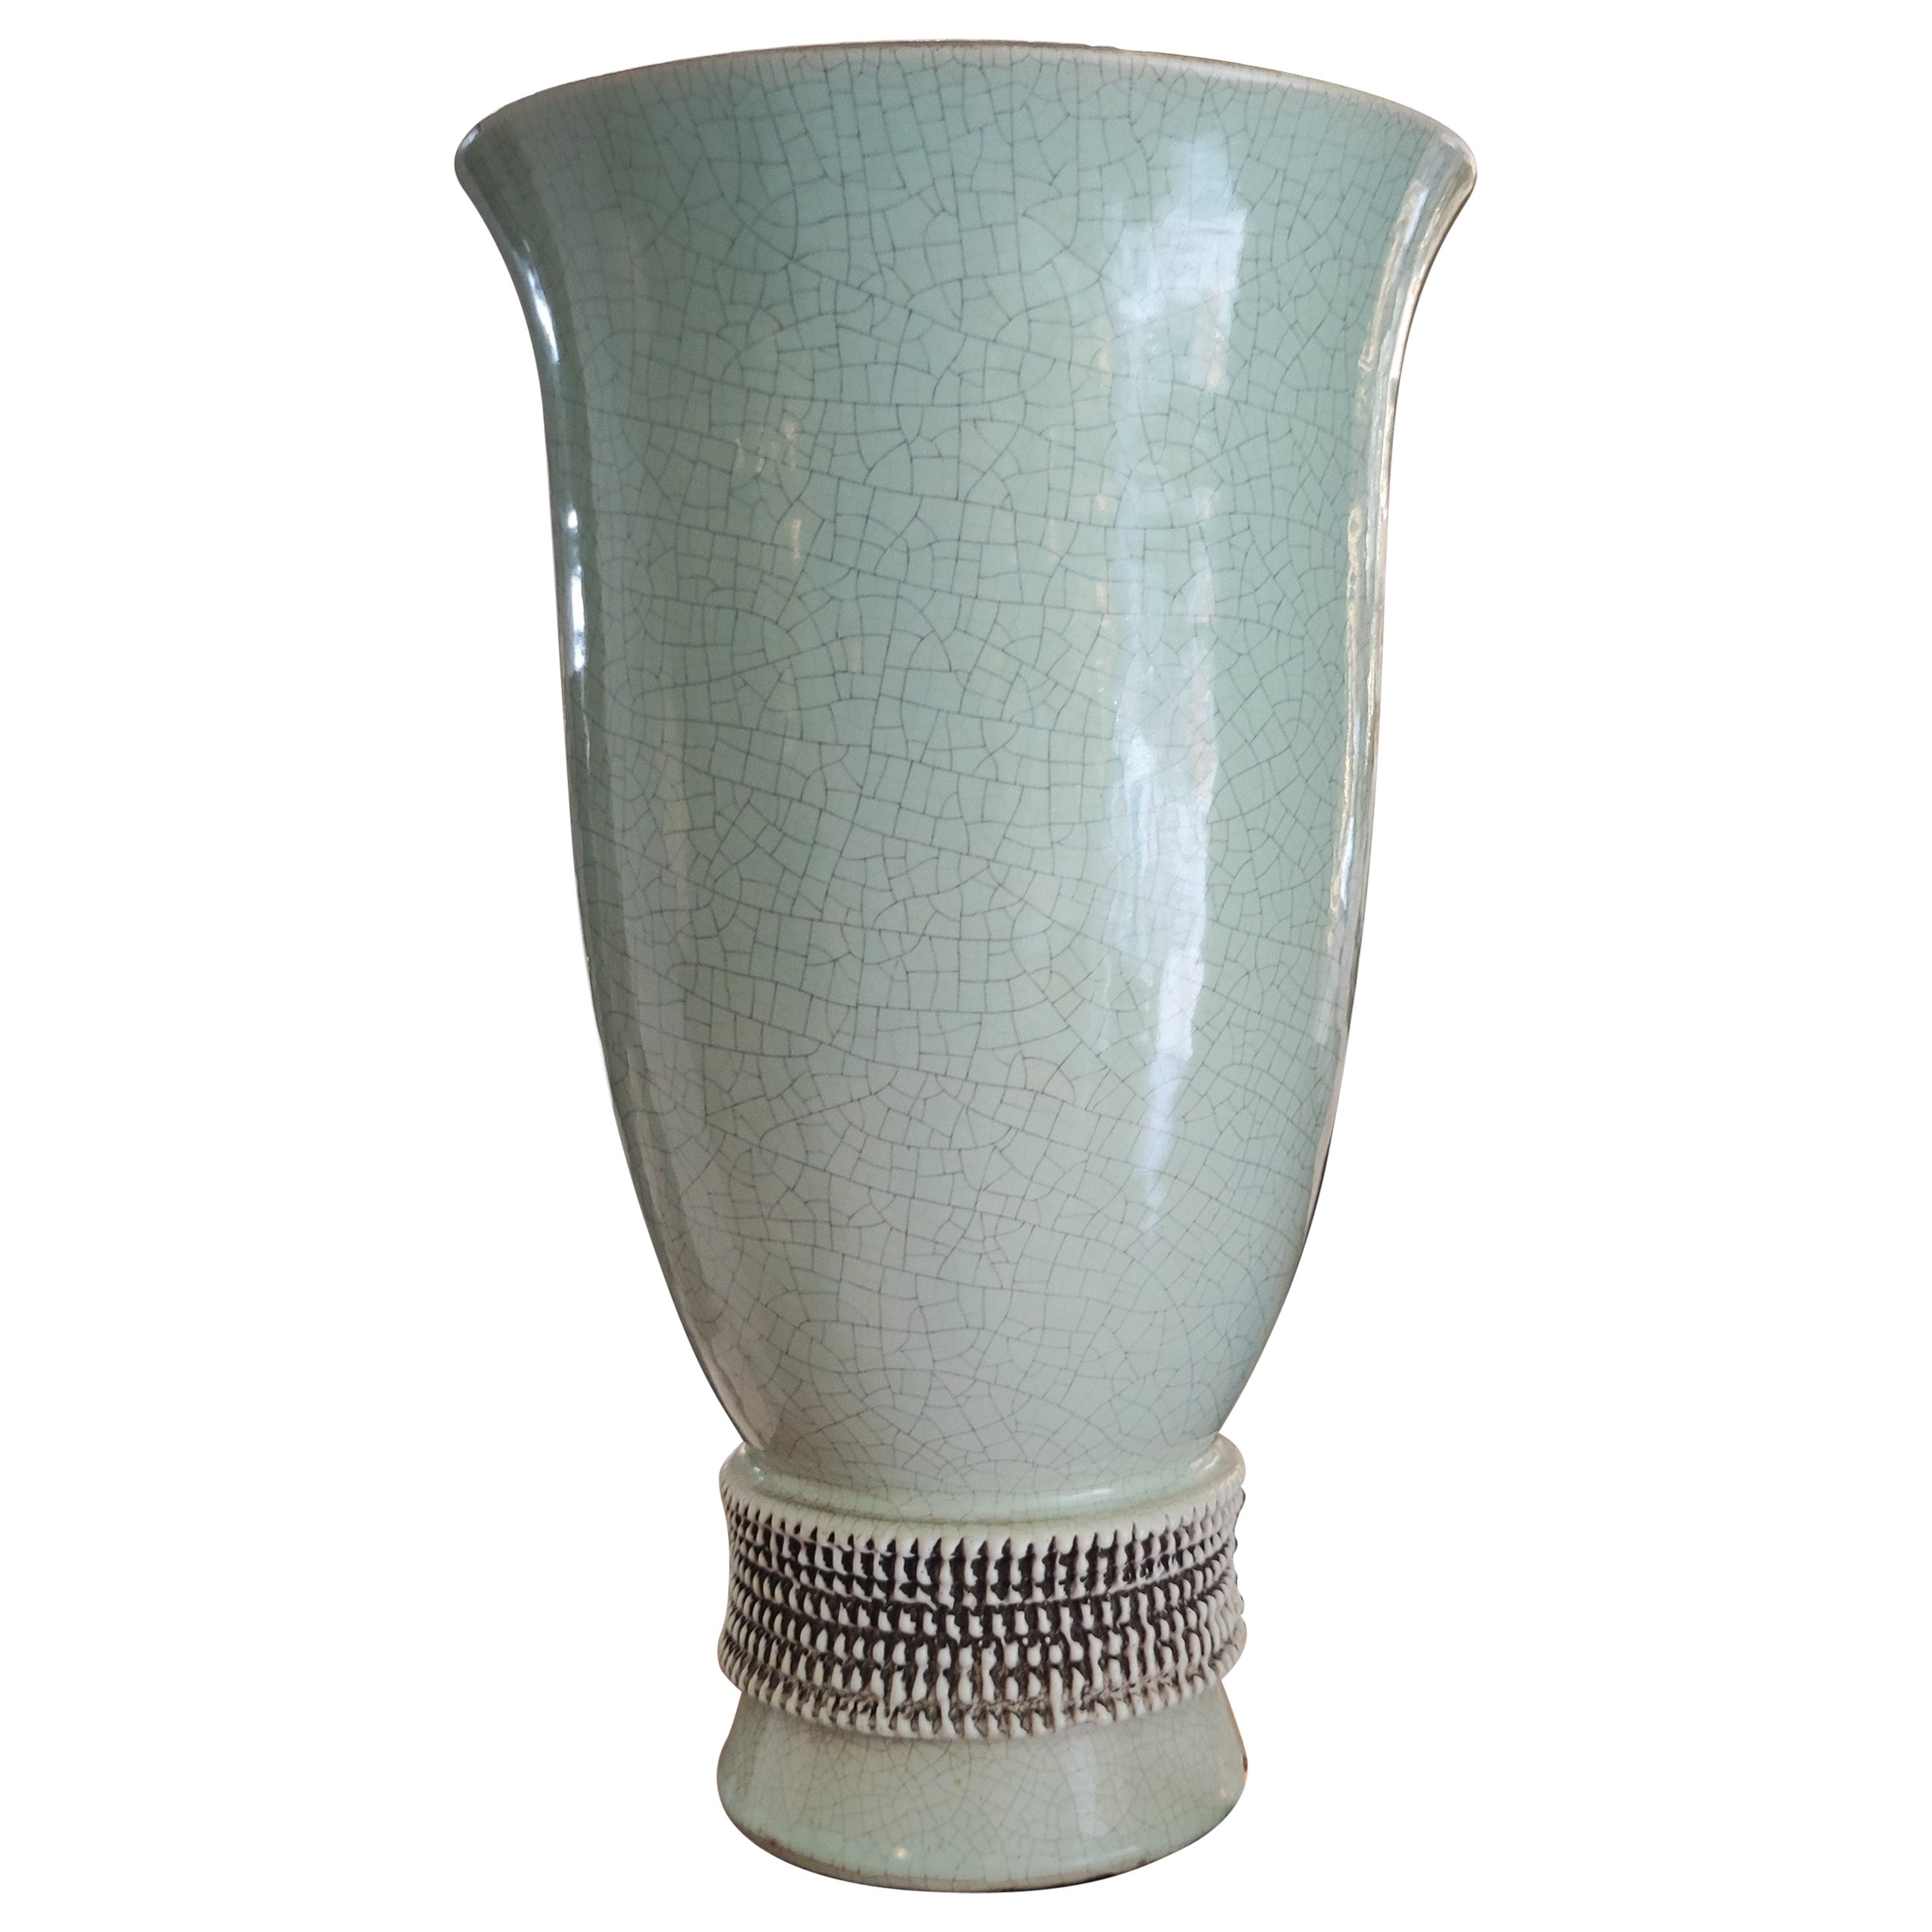 Jean Besnard Lampe aus grüner, rissiger Keramik, um 1930